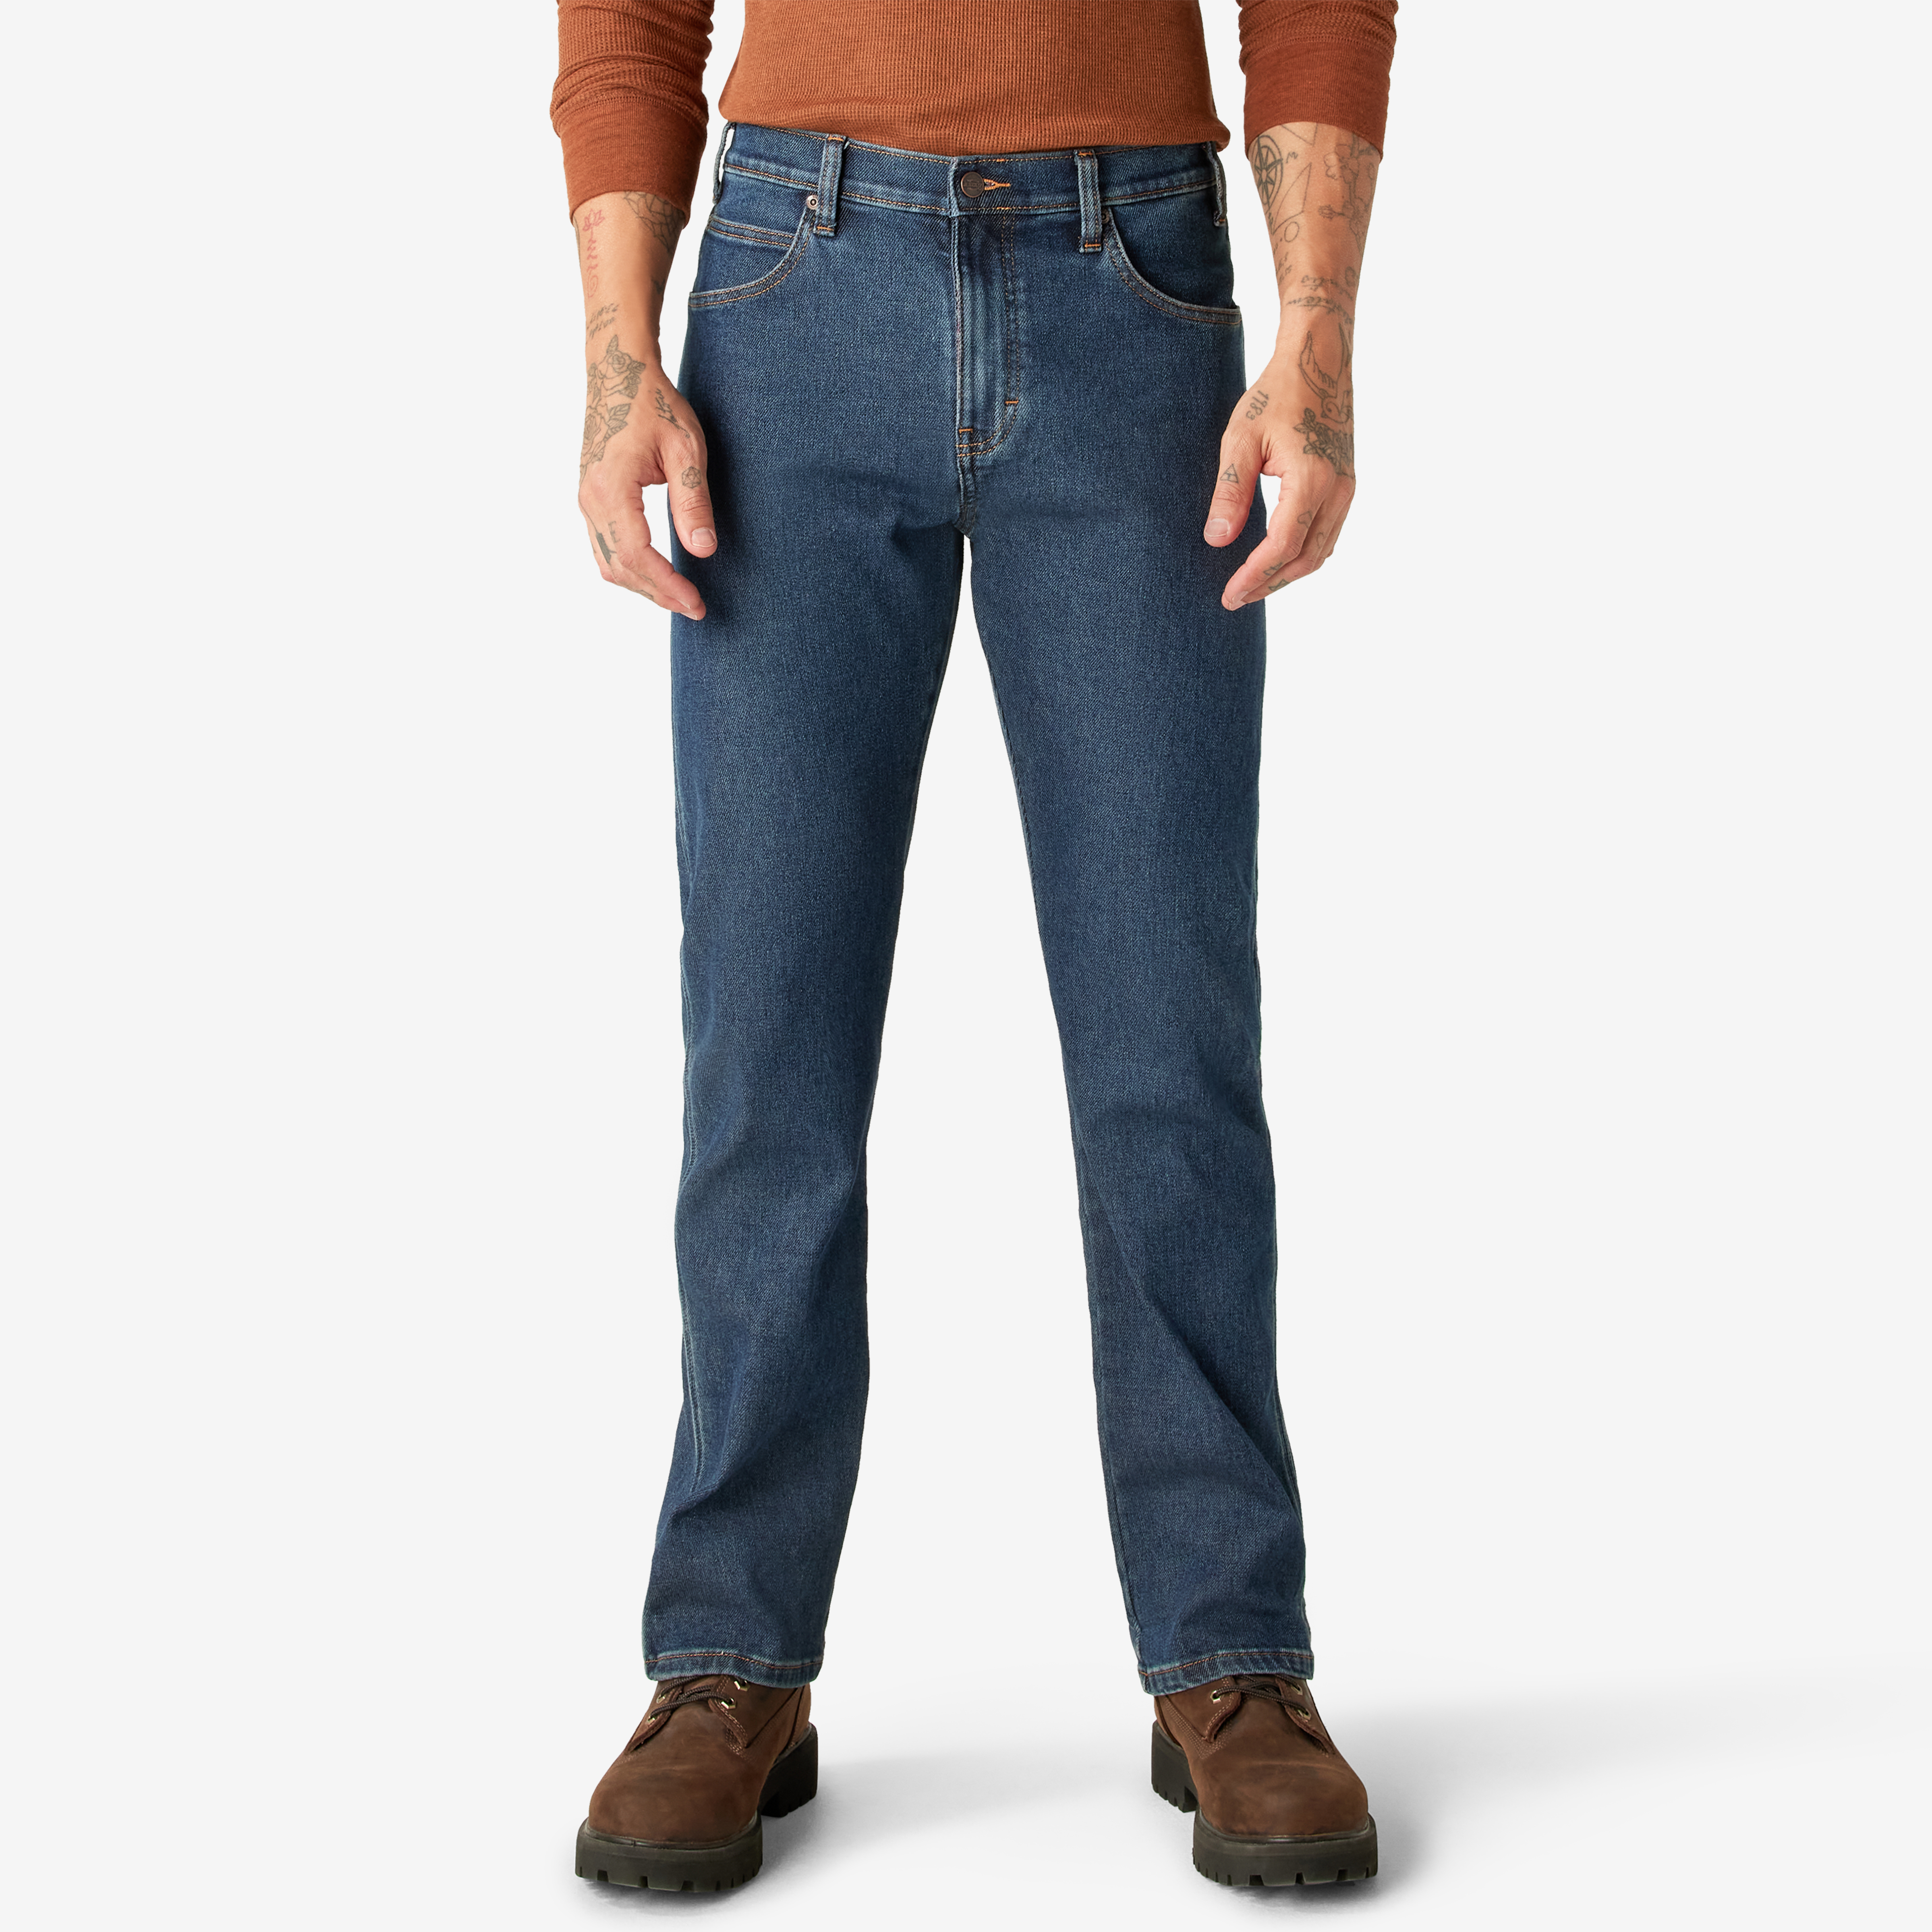 Warming 5-Pocket Lined Denim Jeans - Stonewashed Indigo (SIWR)